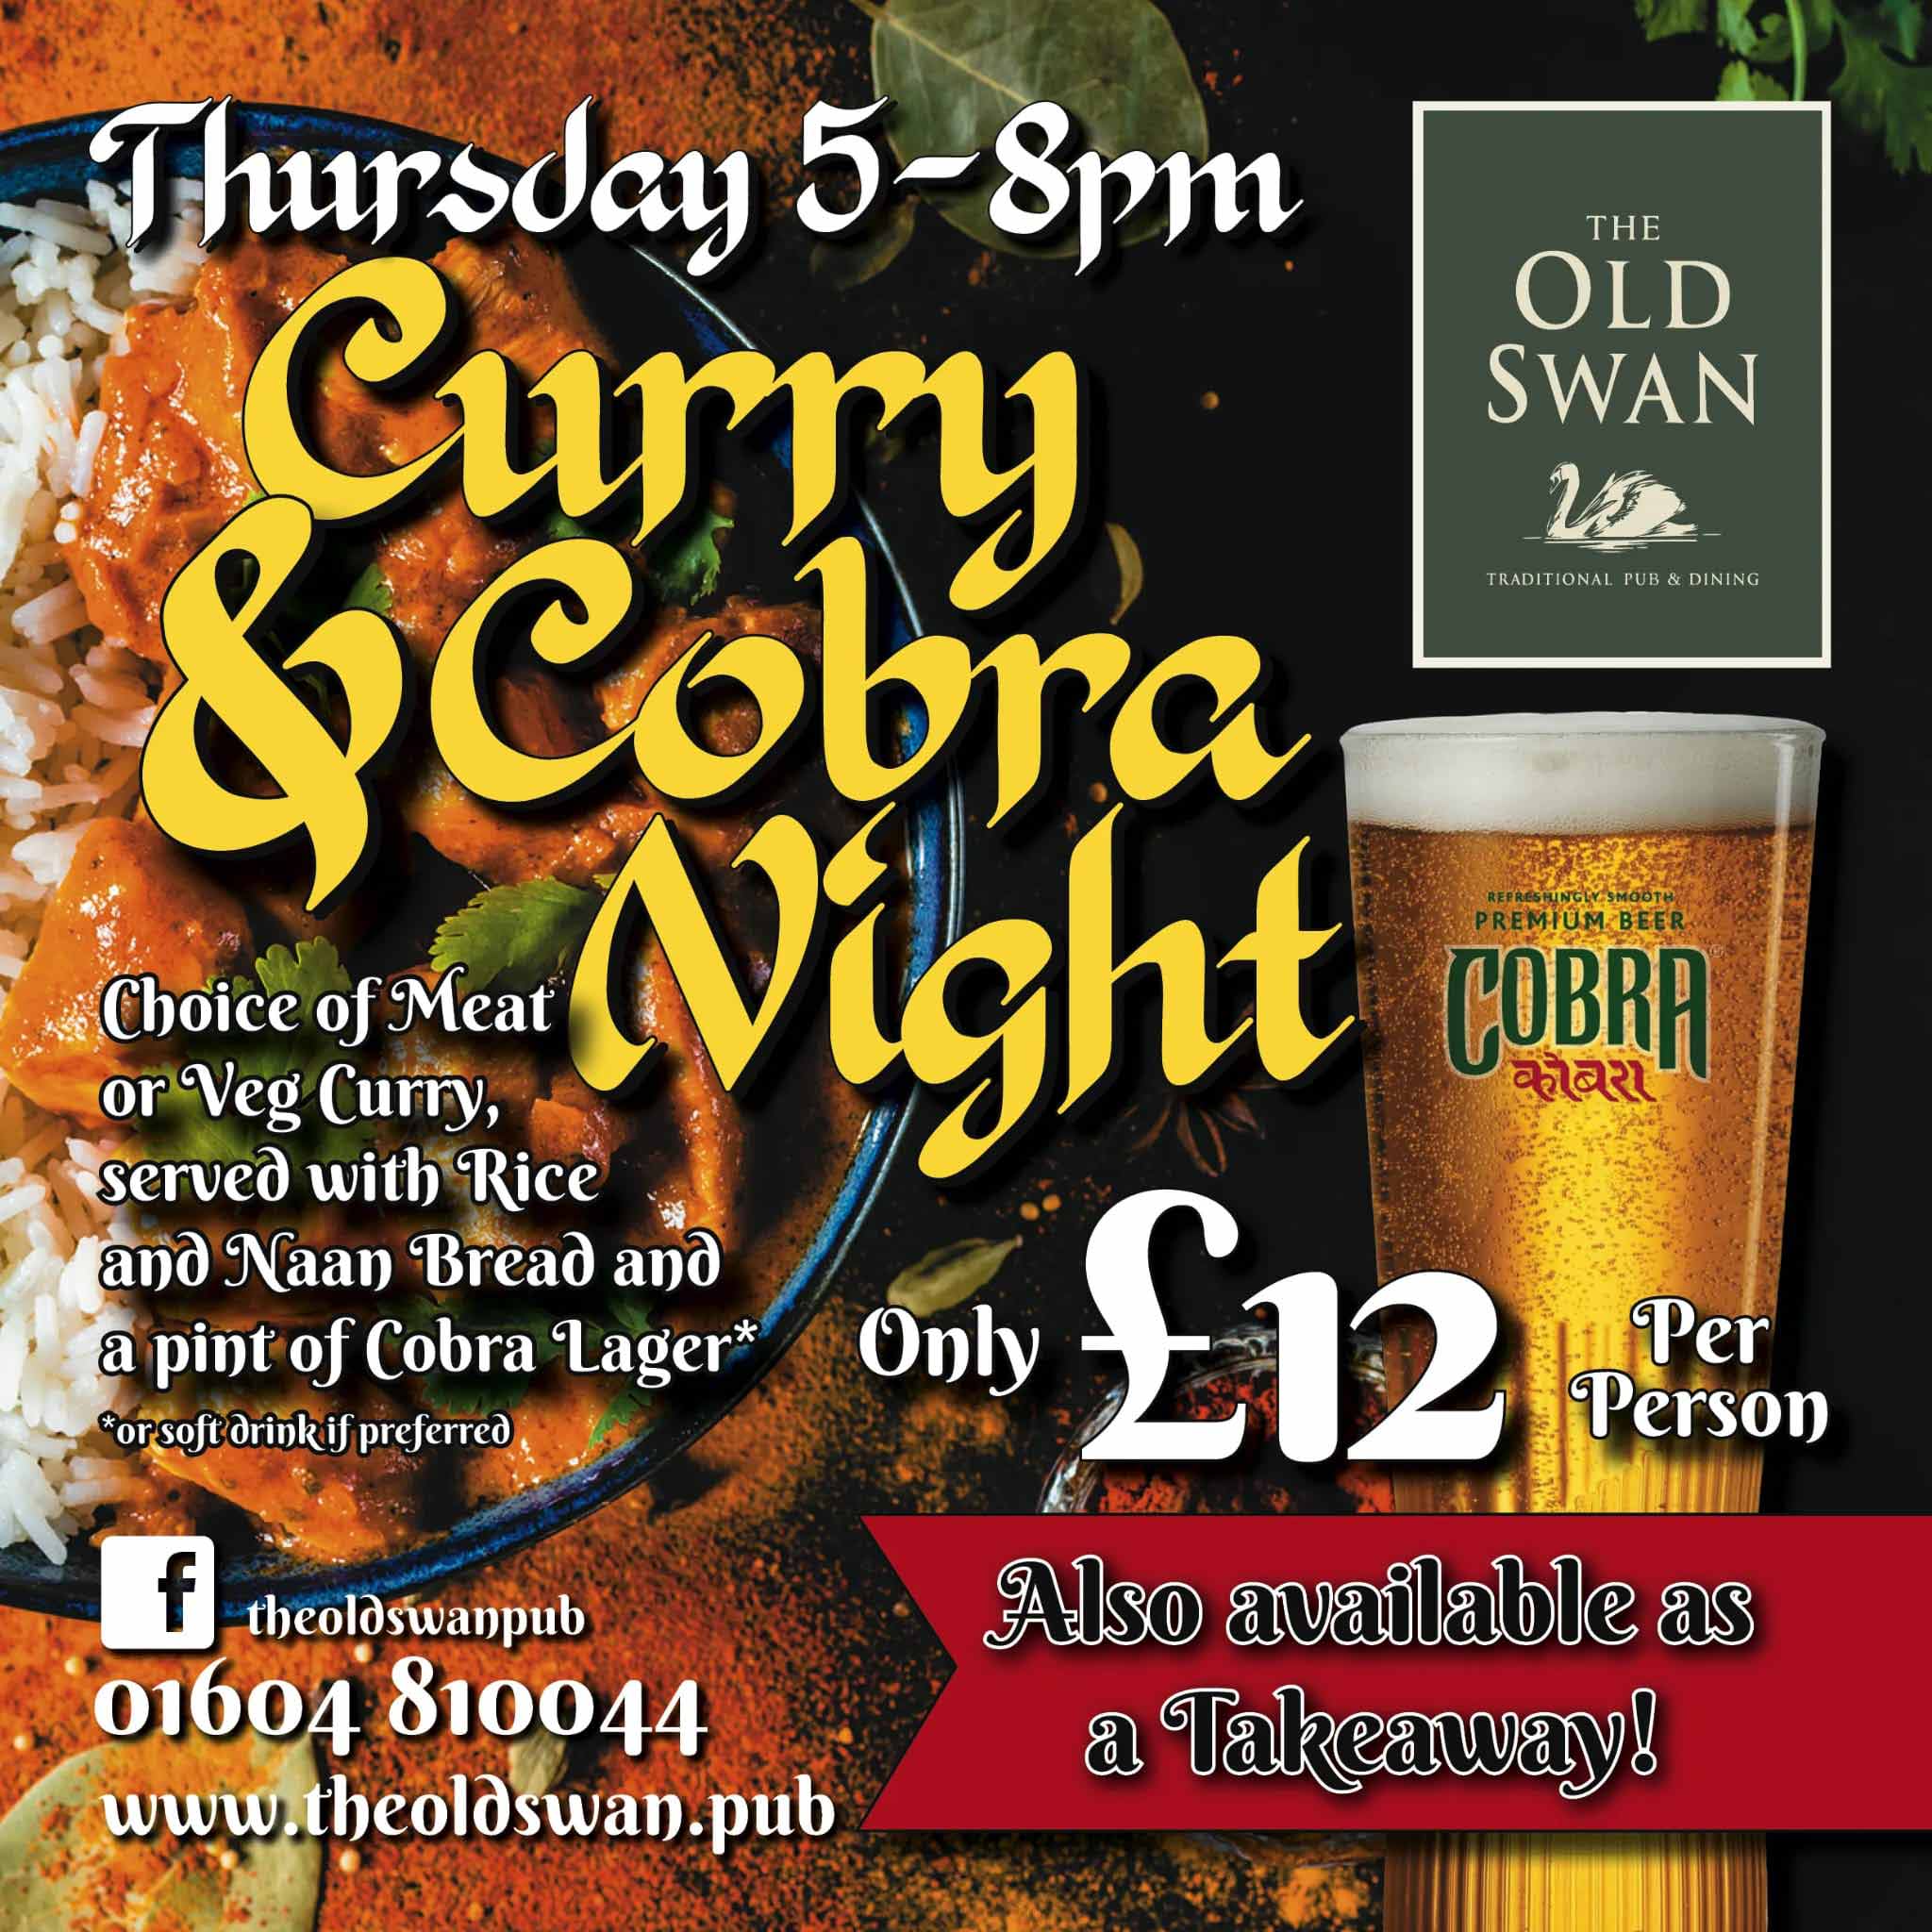 Curry & Cobra Night